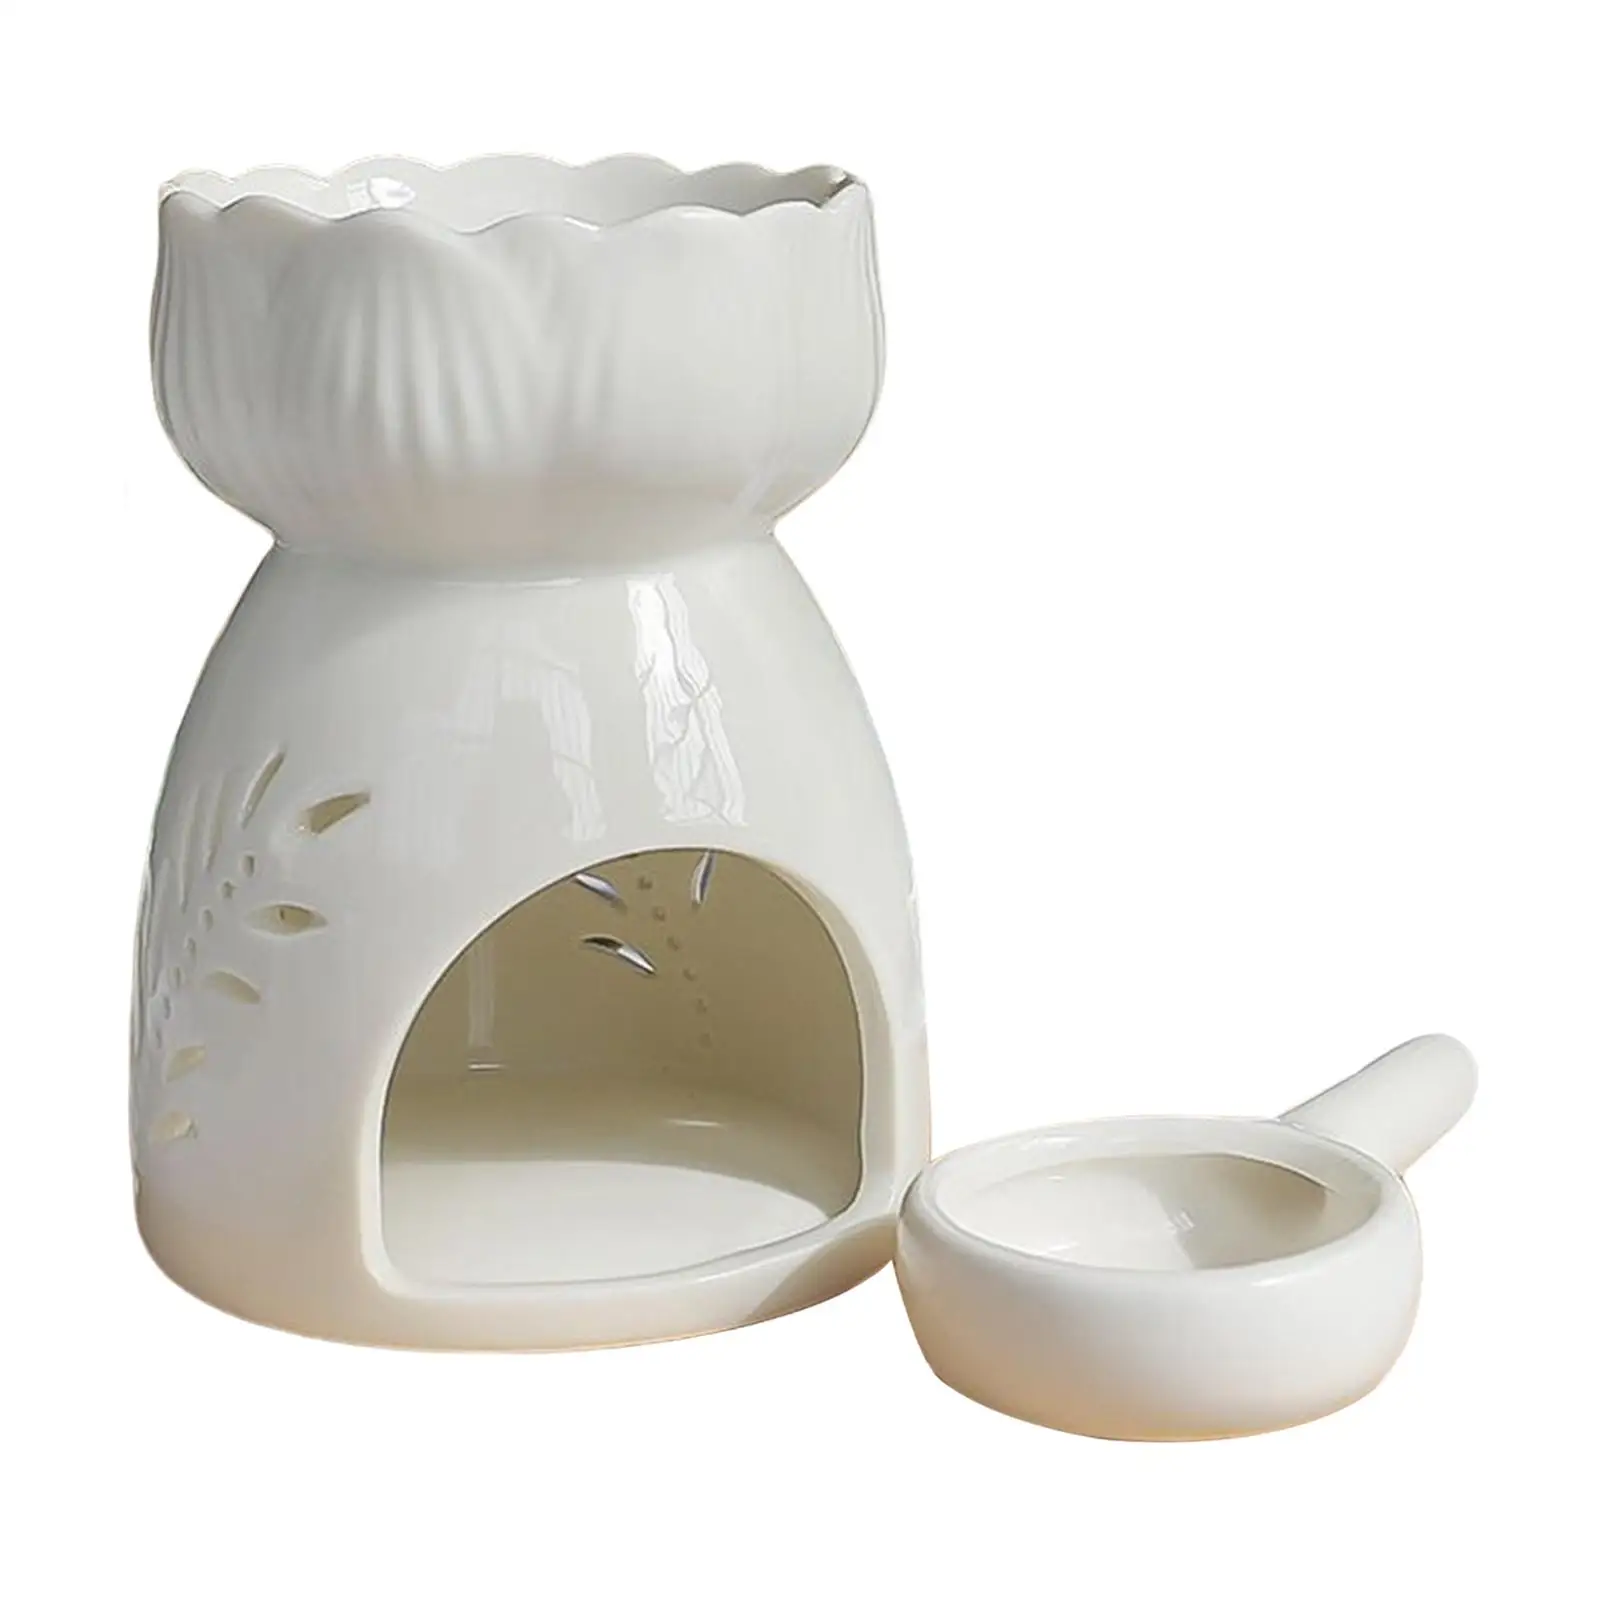 Ceramic Tealight Holder Tealight Candle Holder Lamp for Travel